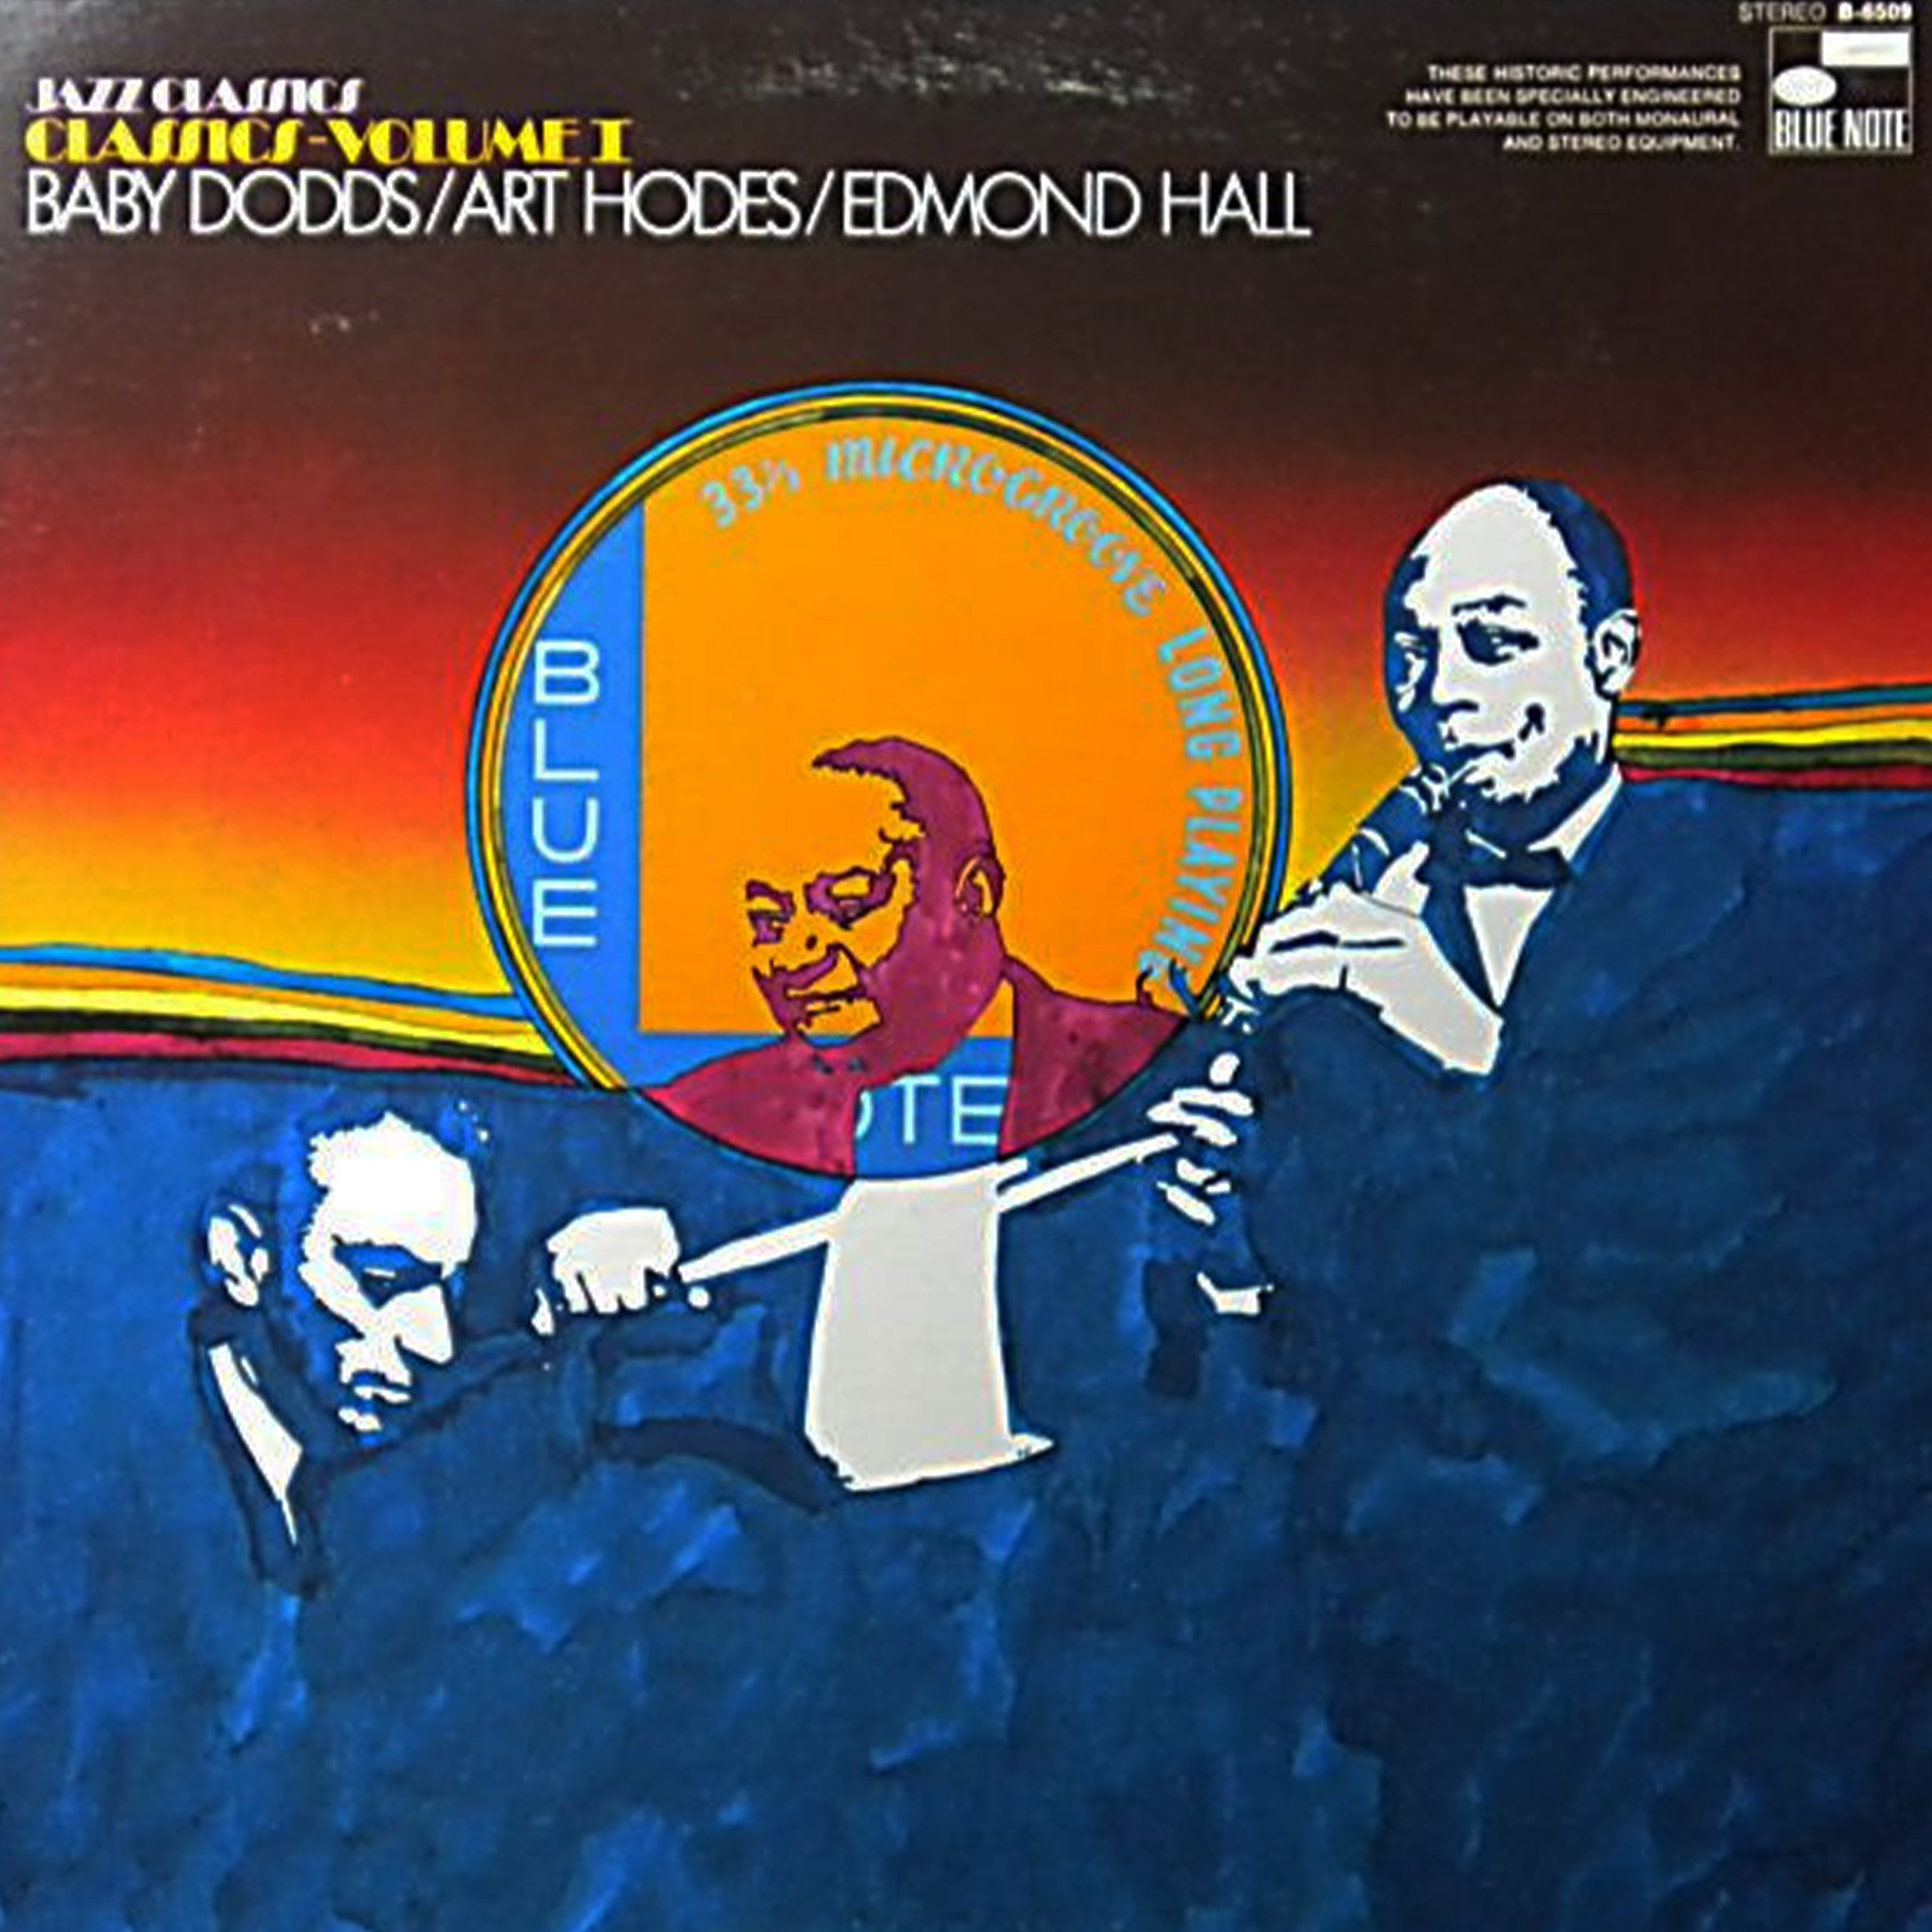 Vinil -  Baby Dodds  Art Hodes  Edmond Hall - Jazz Classics Volume 1 (usa)